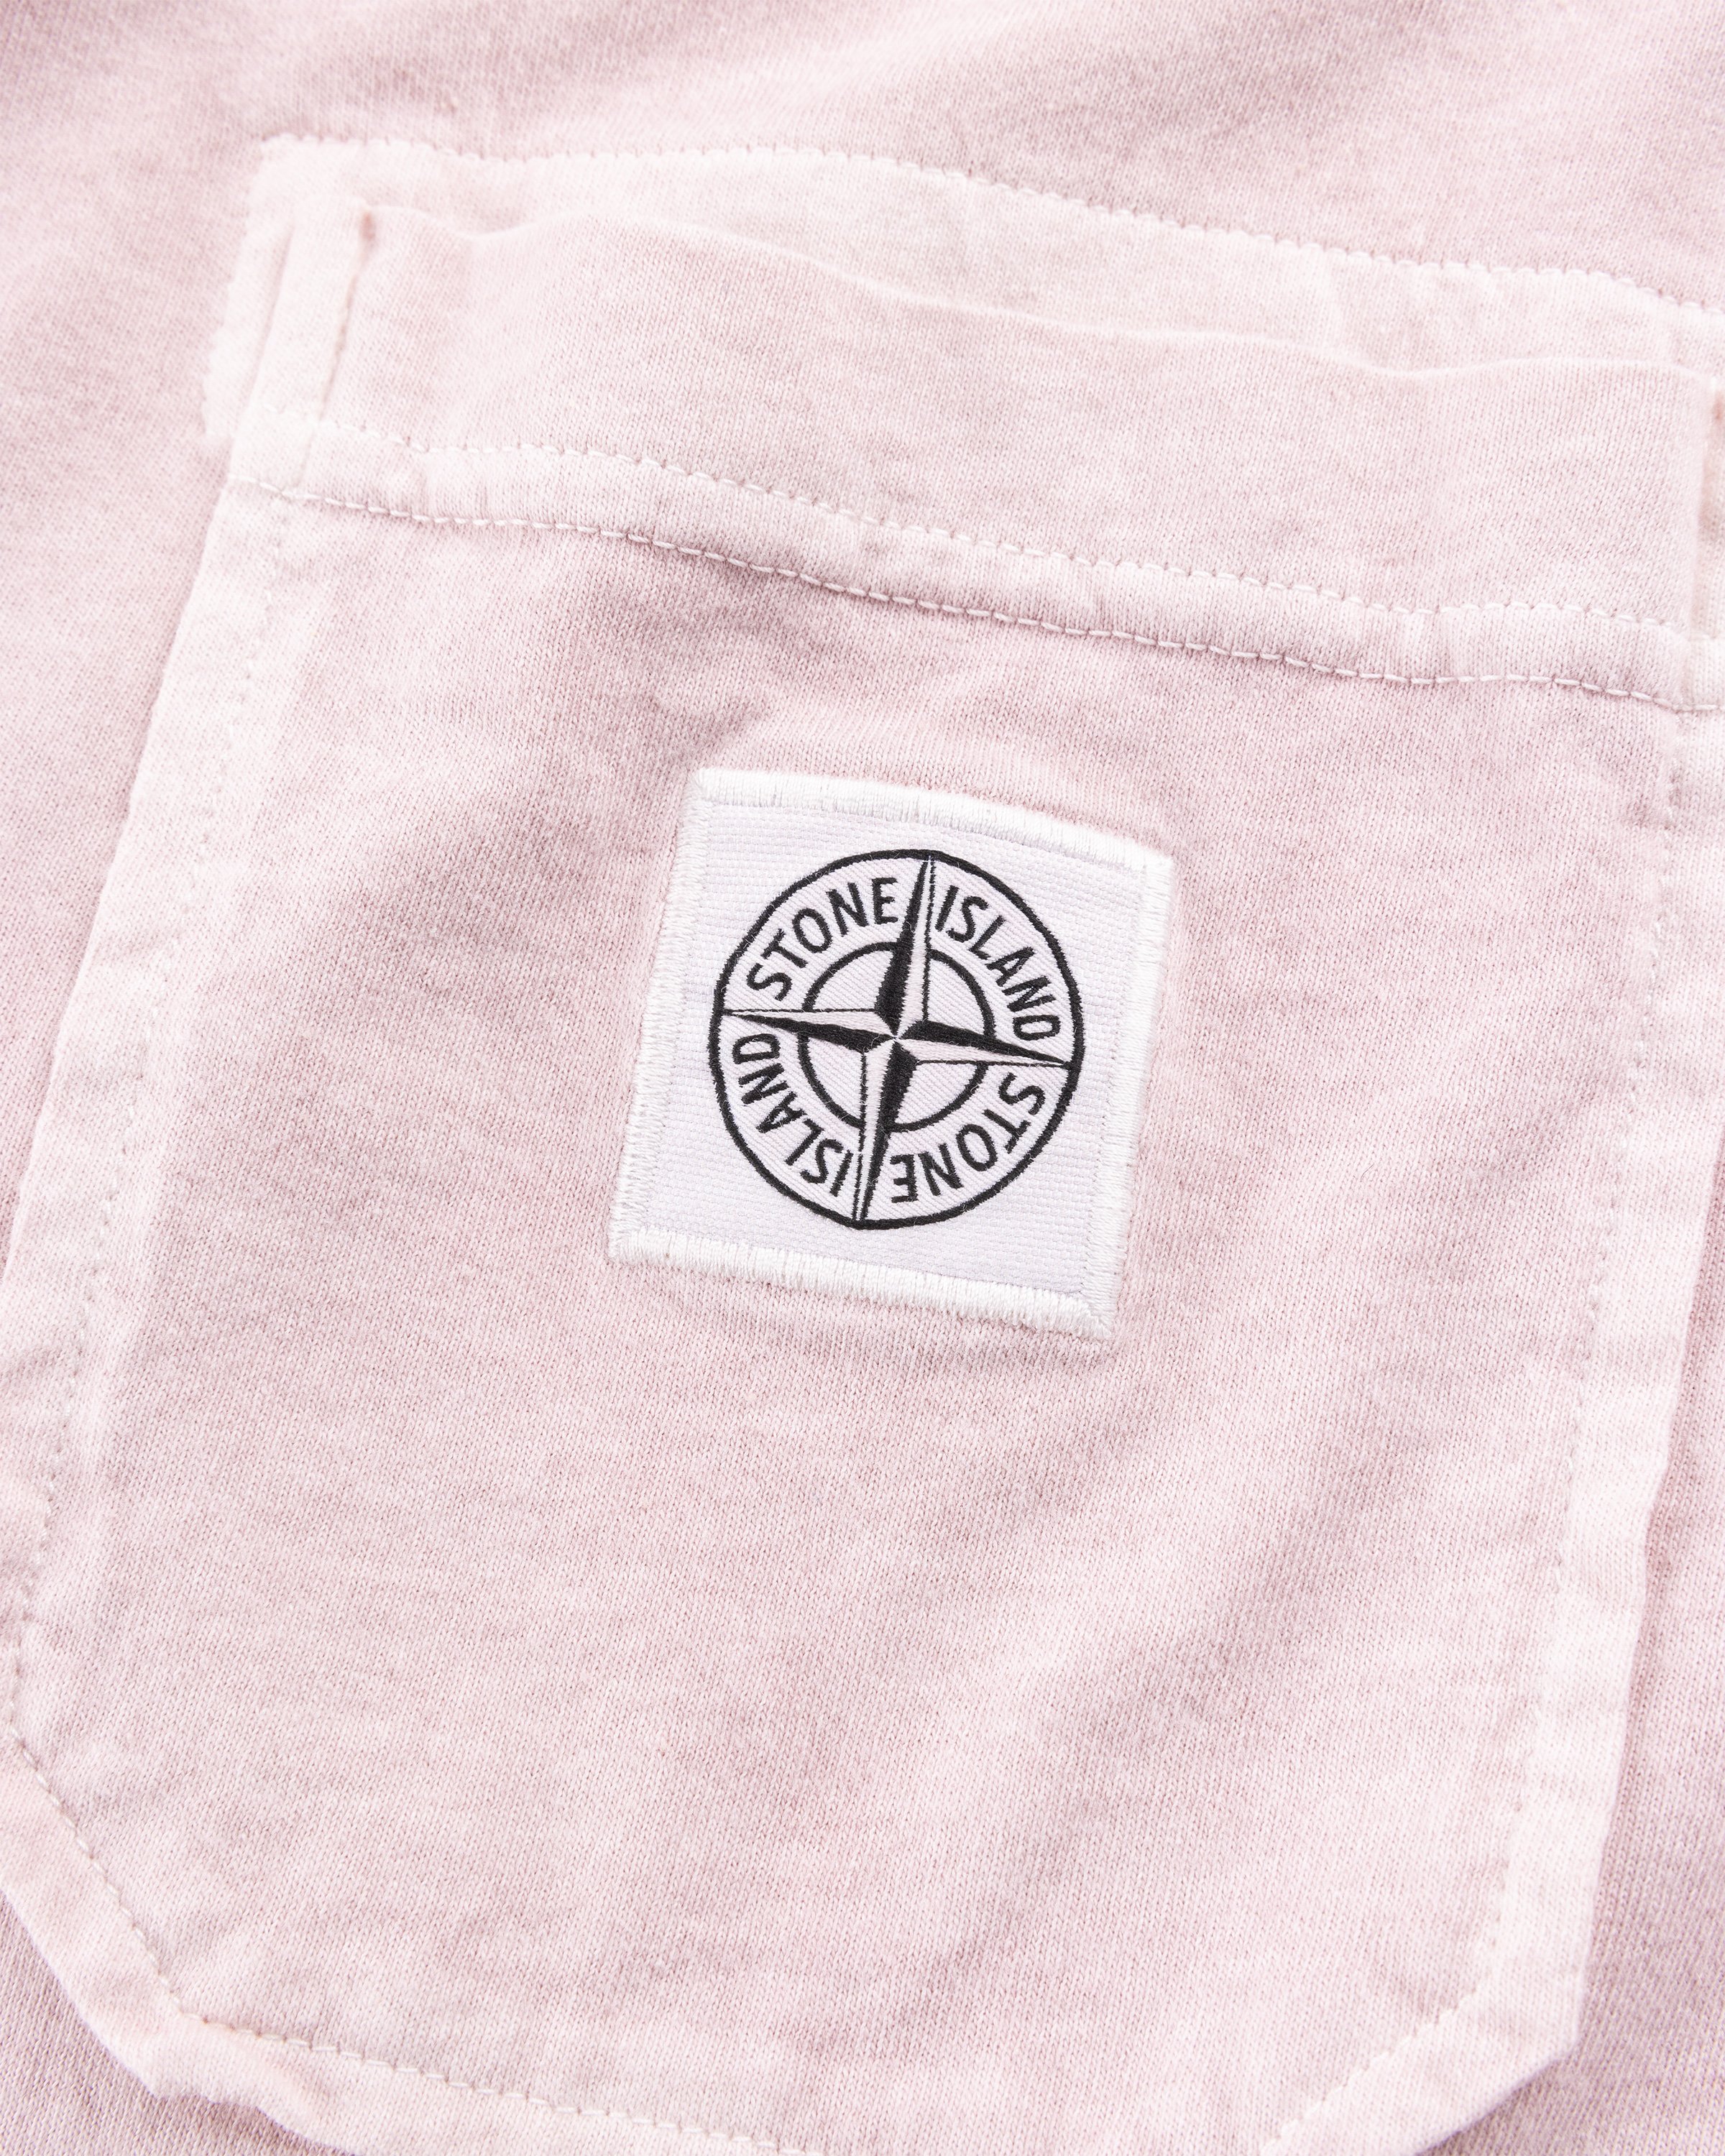 Stone Island - T SHIRT PINK - Clothing - Pink - Image 7